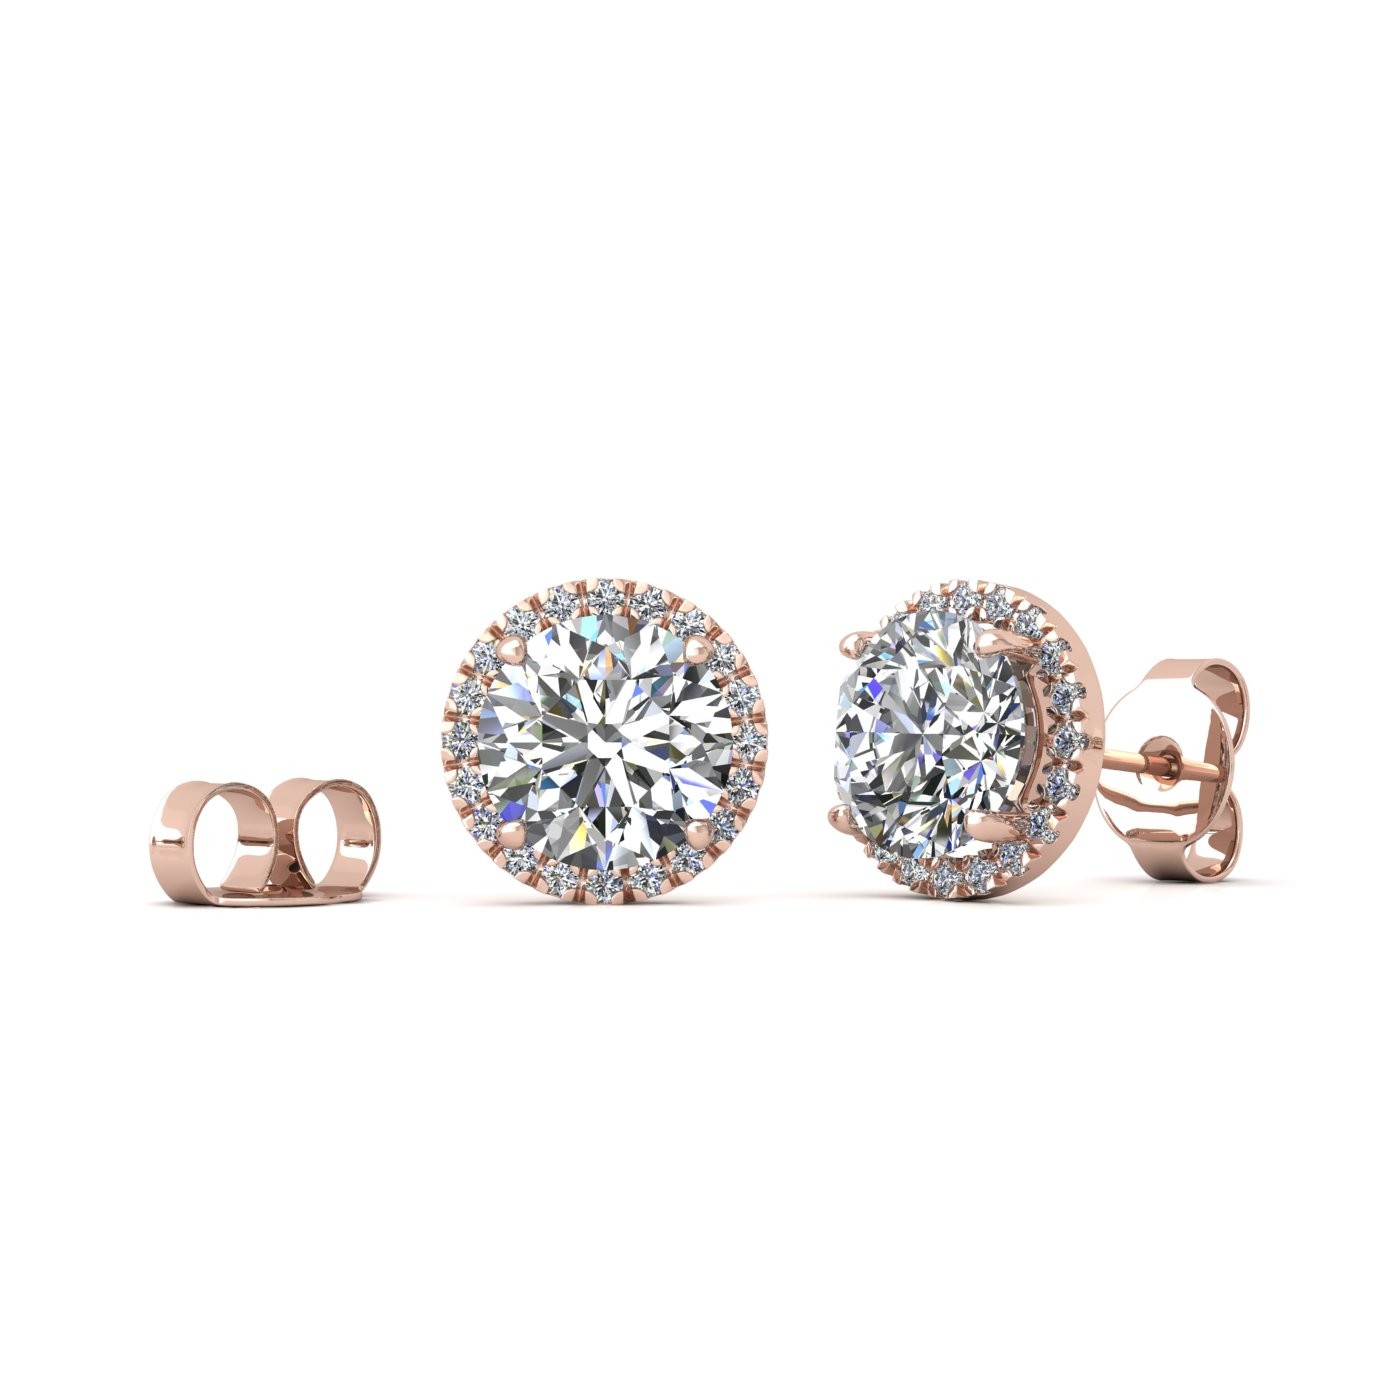 18k white gold  0,7 ct each (1,4 tcw) 4 prongs round shape diamond earrings with diamond pavÉ set halo Photos & images